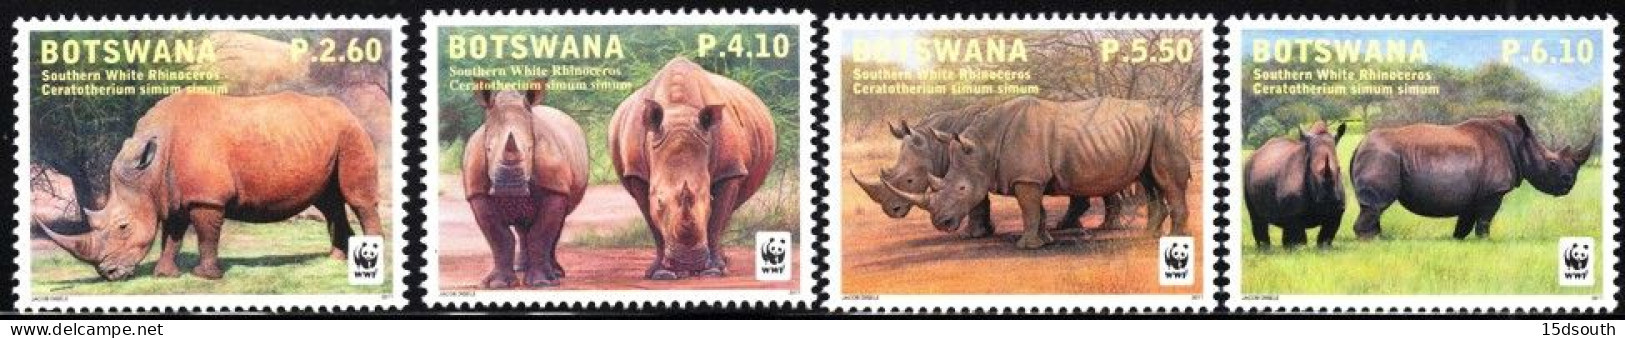 Botswana - 2011 WWF Rhino Set (**) - Rhinoceros